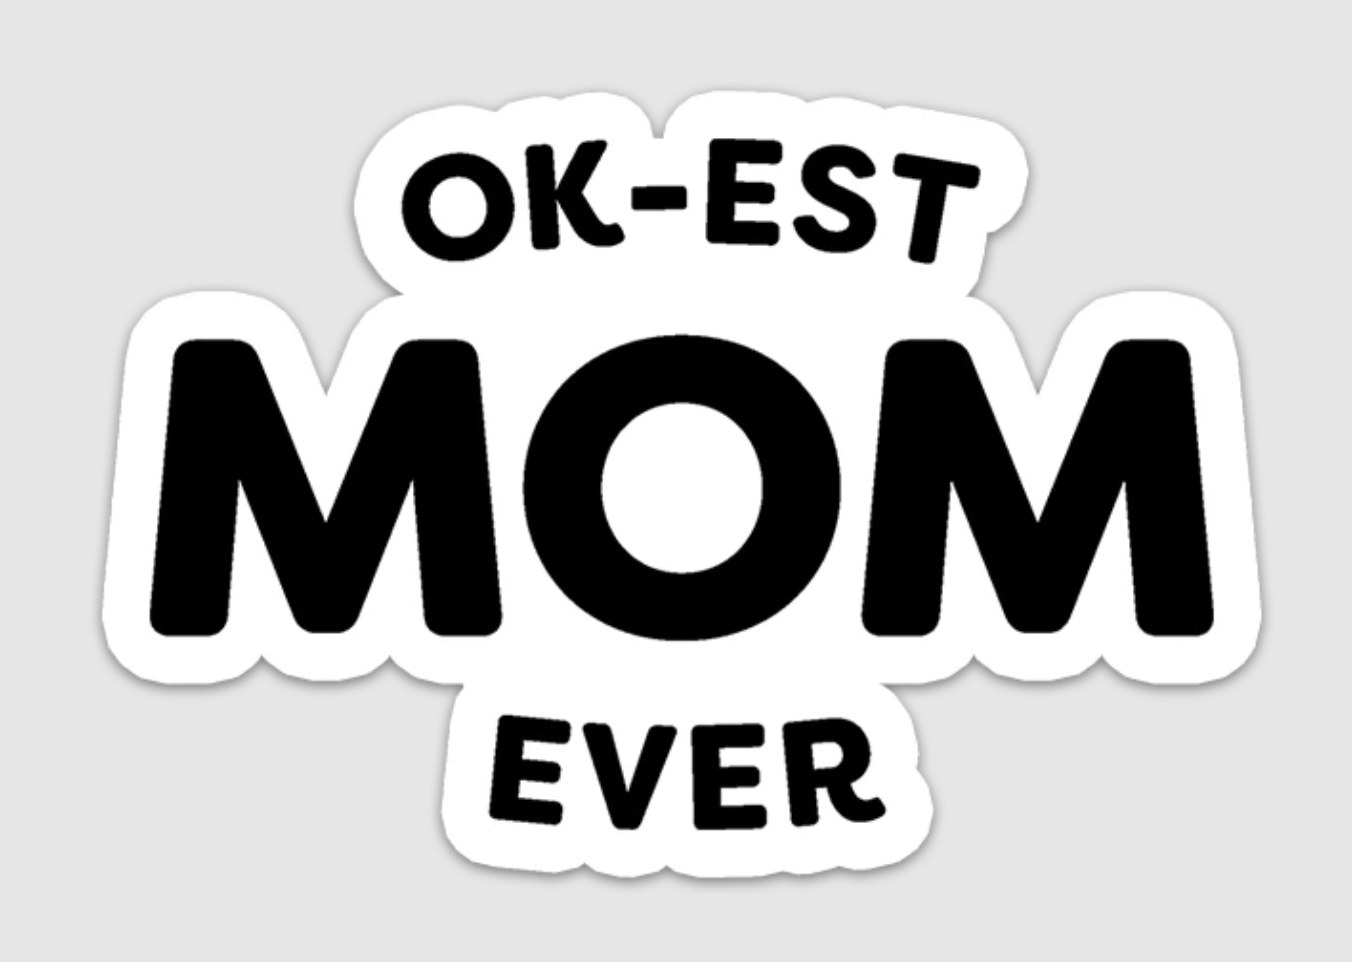 the sticker that says ok-est mom ever